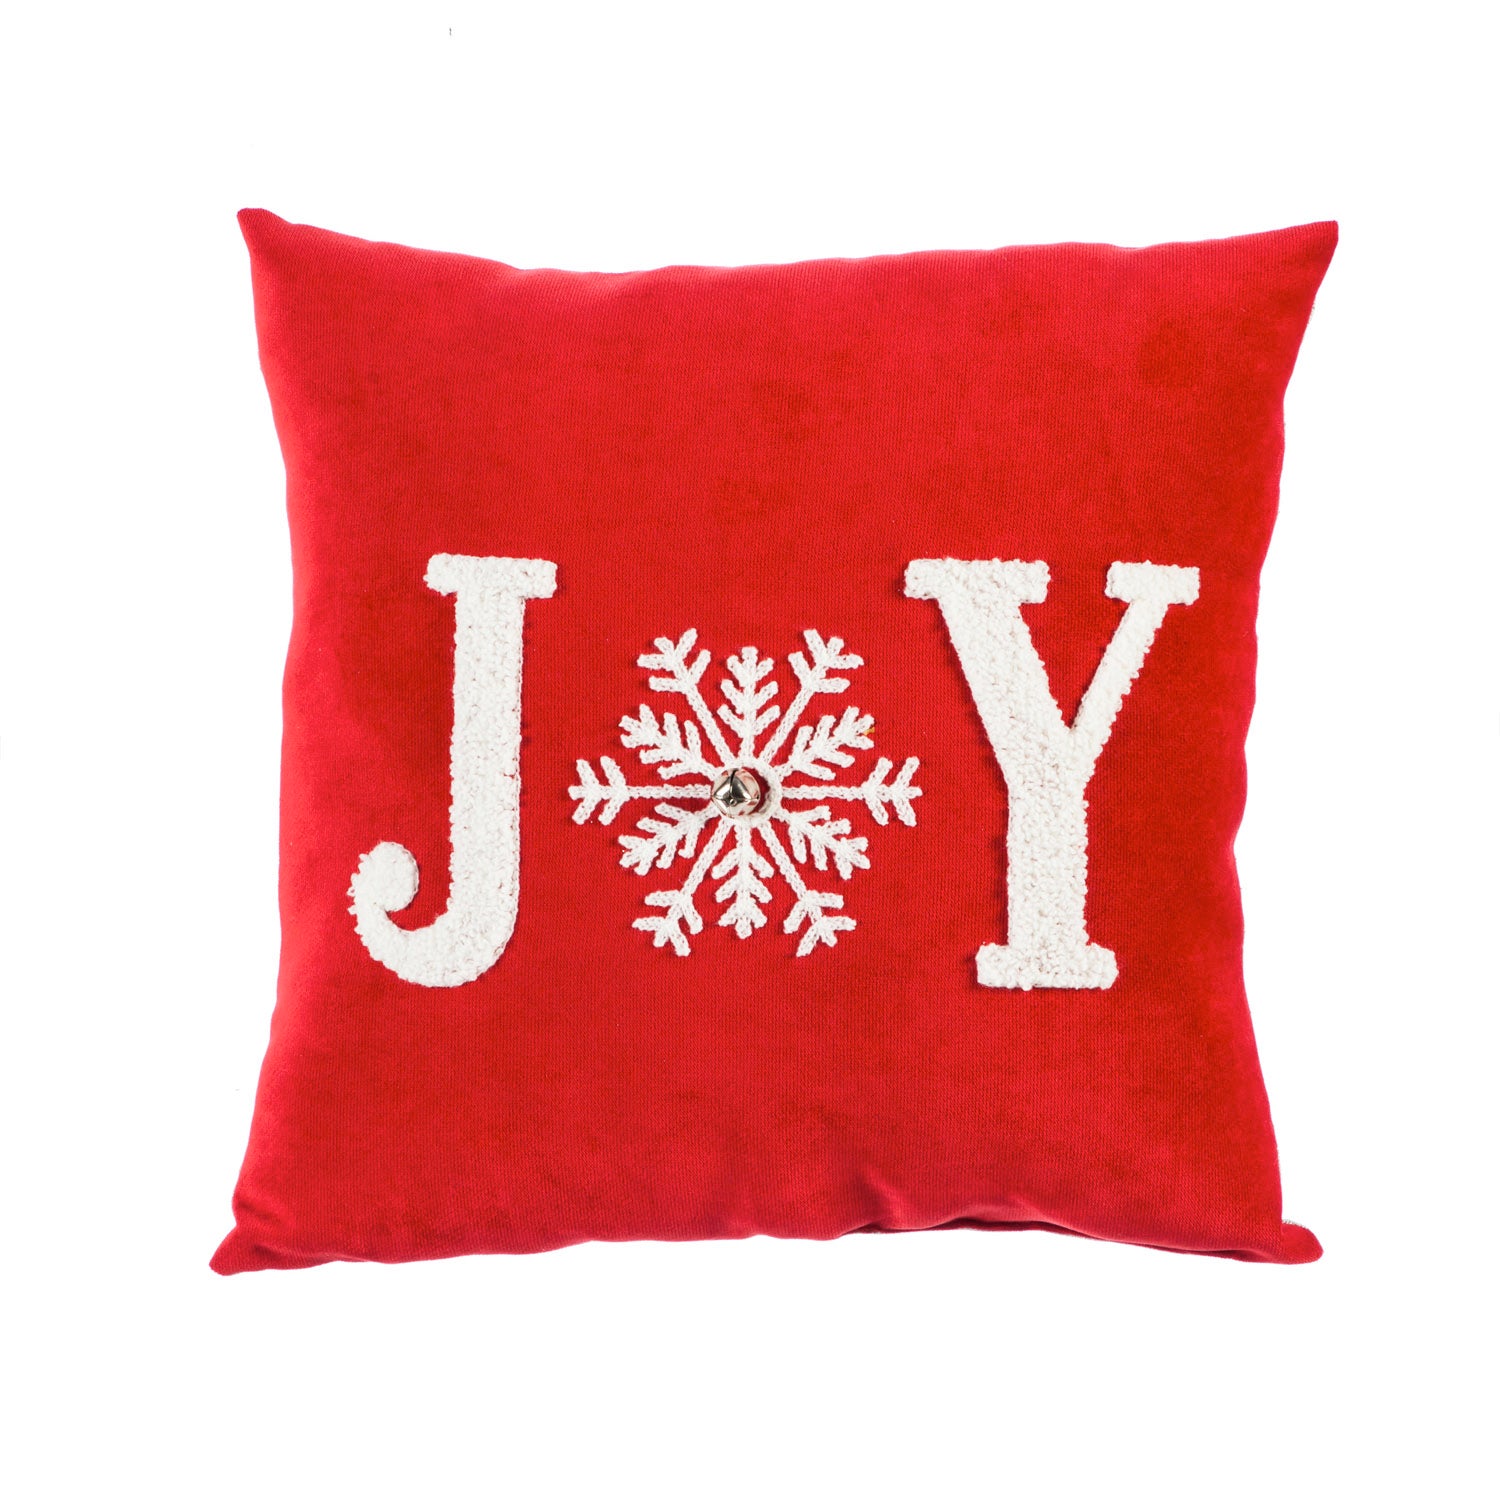 Snowflake Square Pillow: JOY